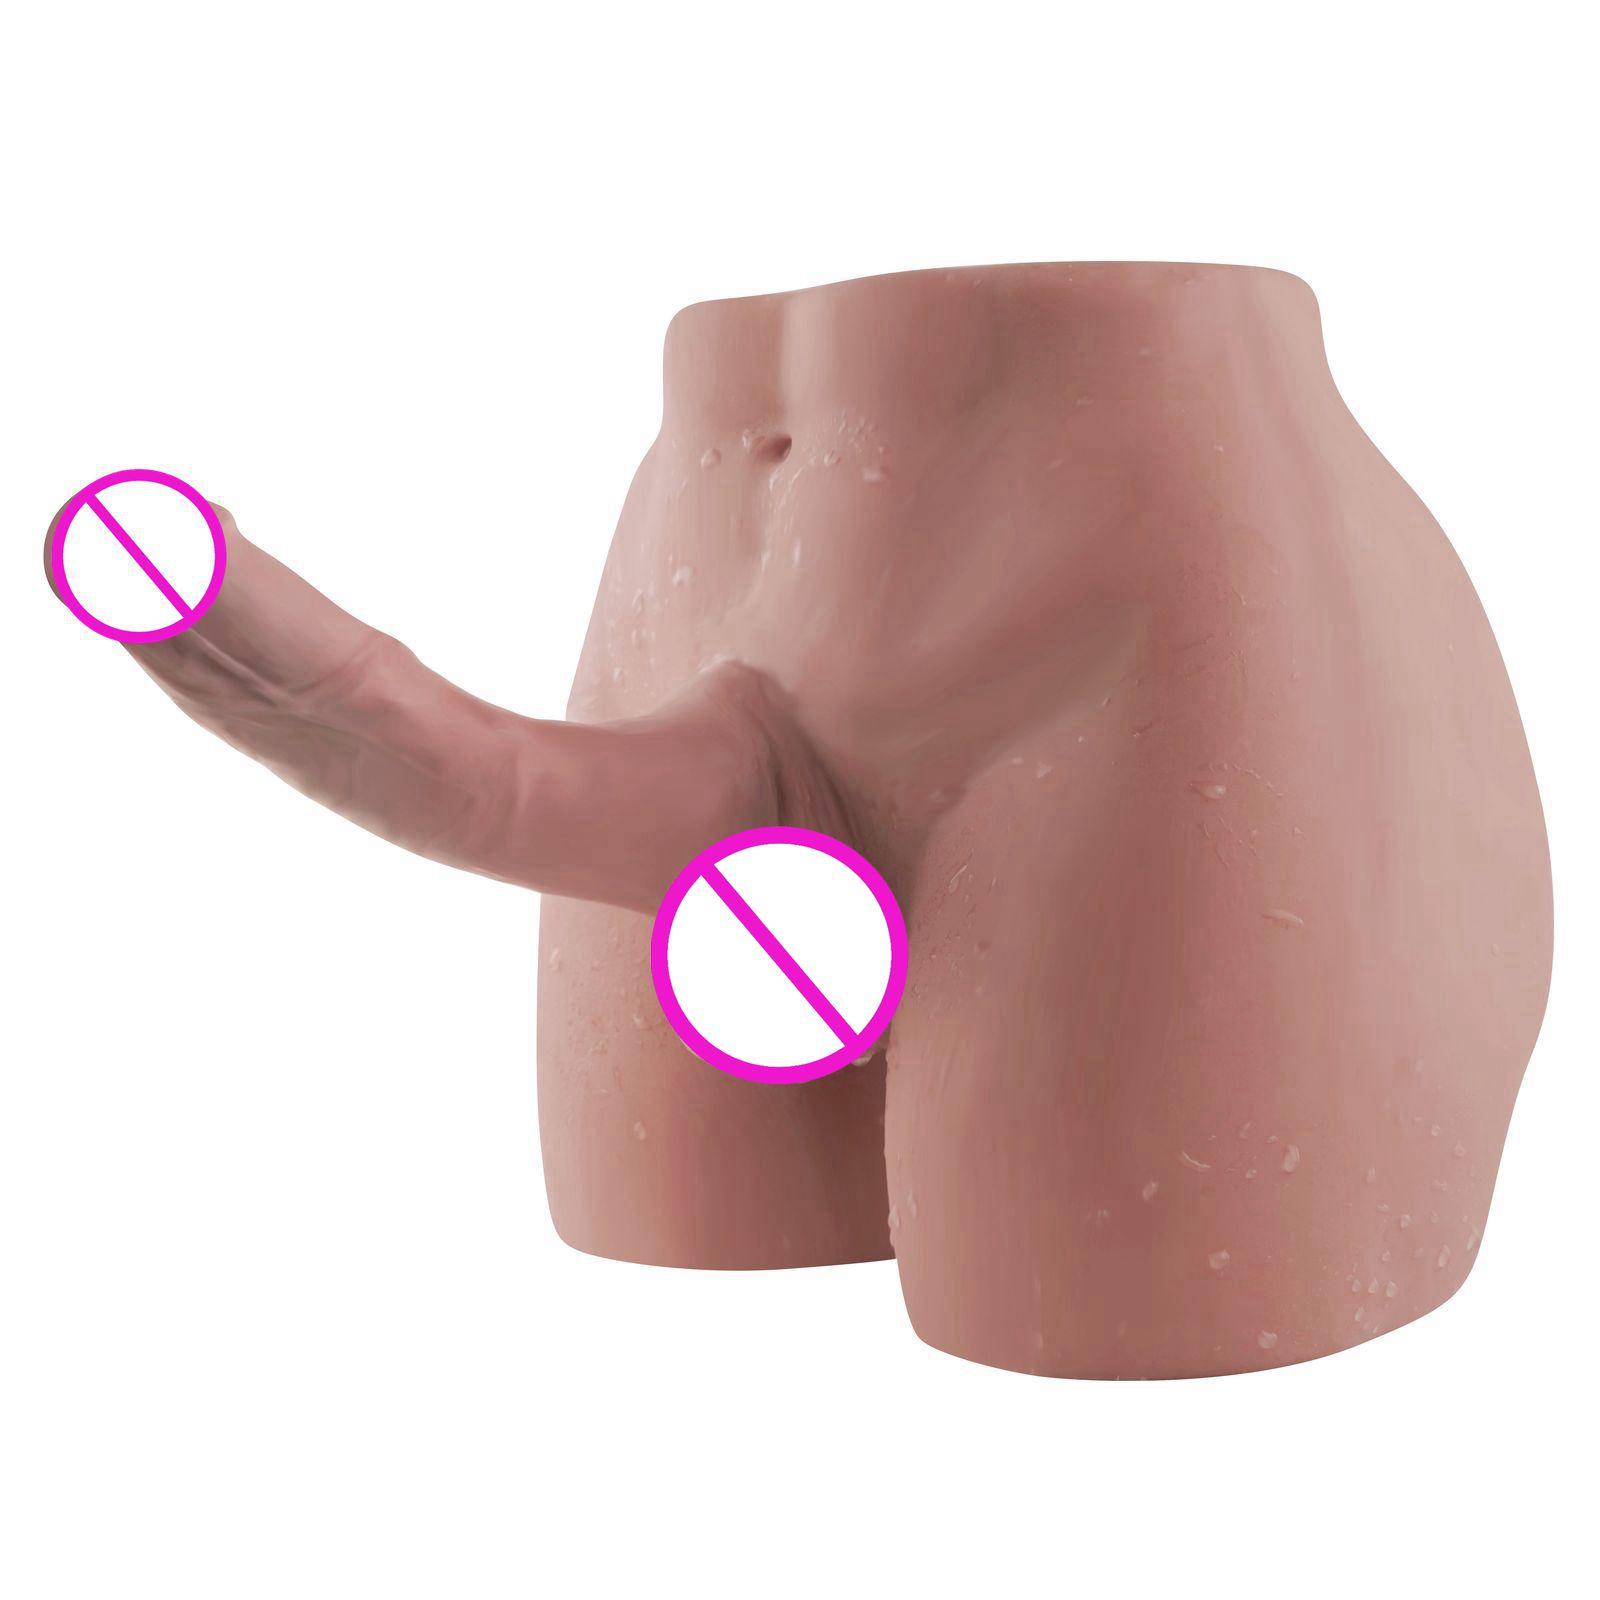 8kg Realistic Artificial Penis Torso Transgender Sex Doll Huge Dildo Vagina G-spot Massager Sex Toy For Women Men Lesbian